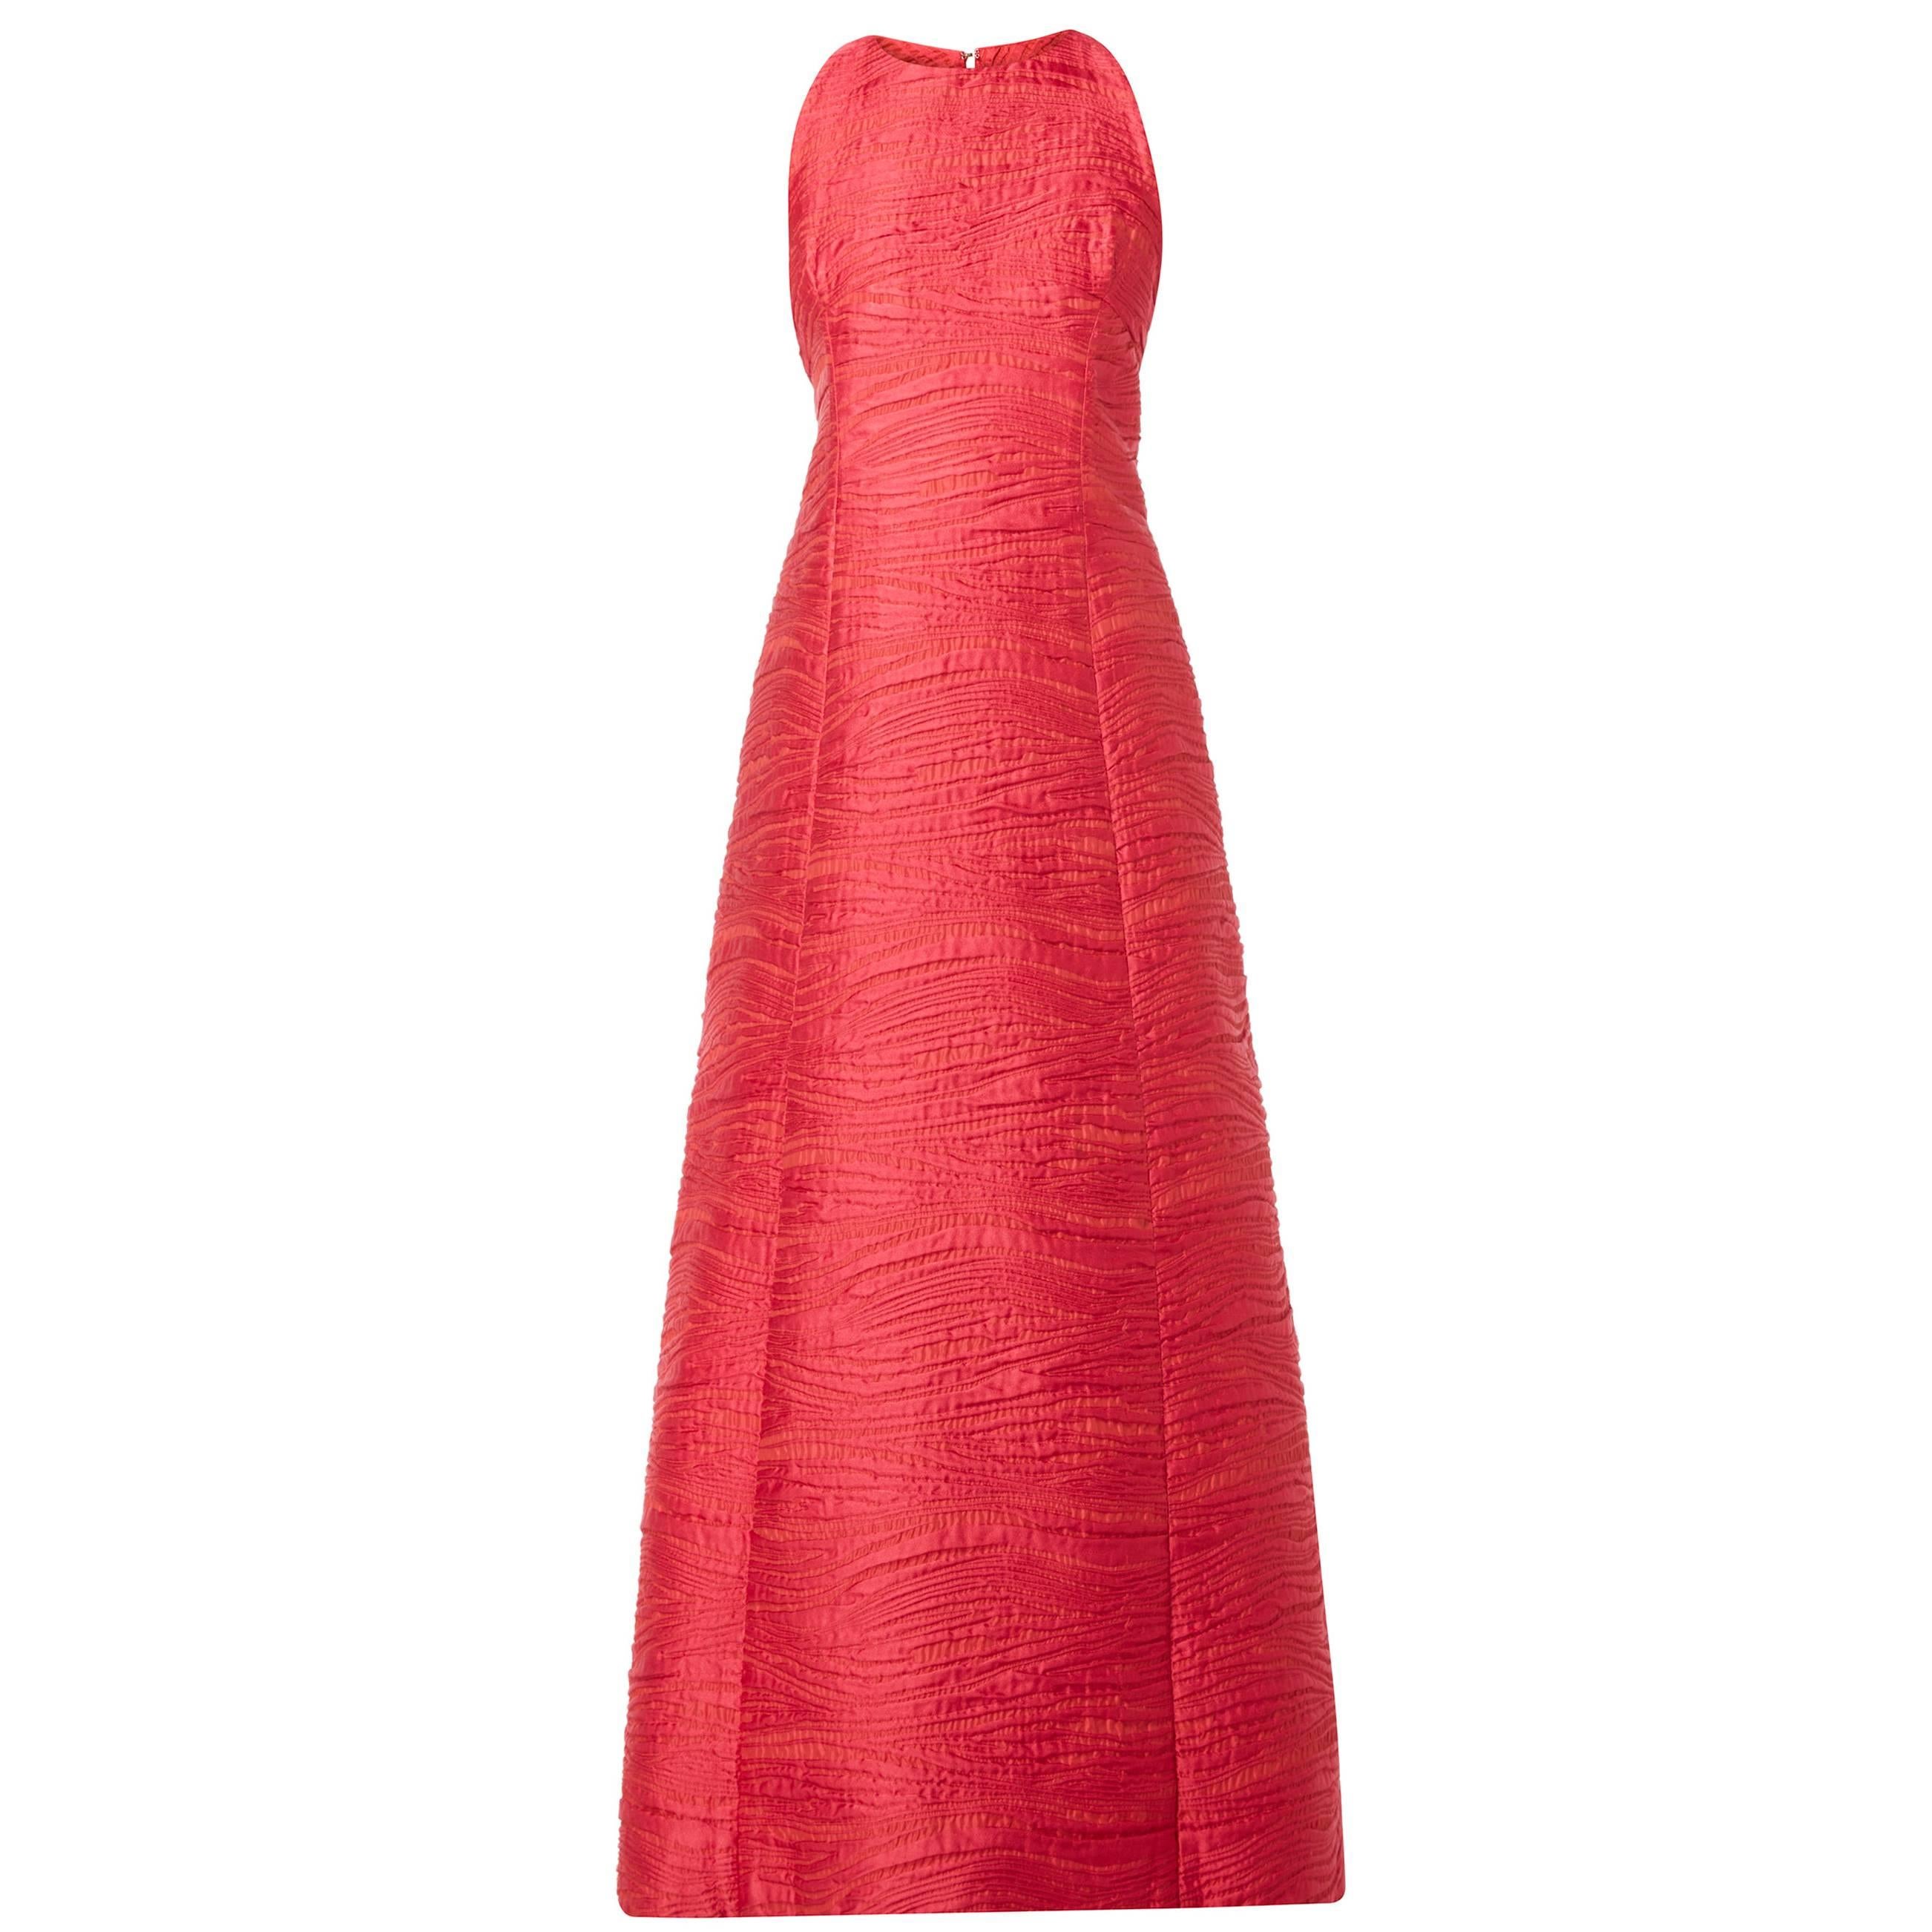 Pierre Balmain haute couture pink dress, circa 1960 For Sale